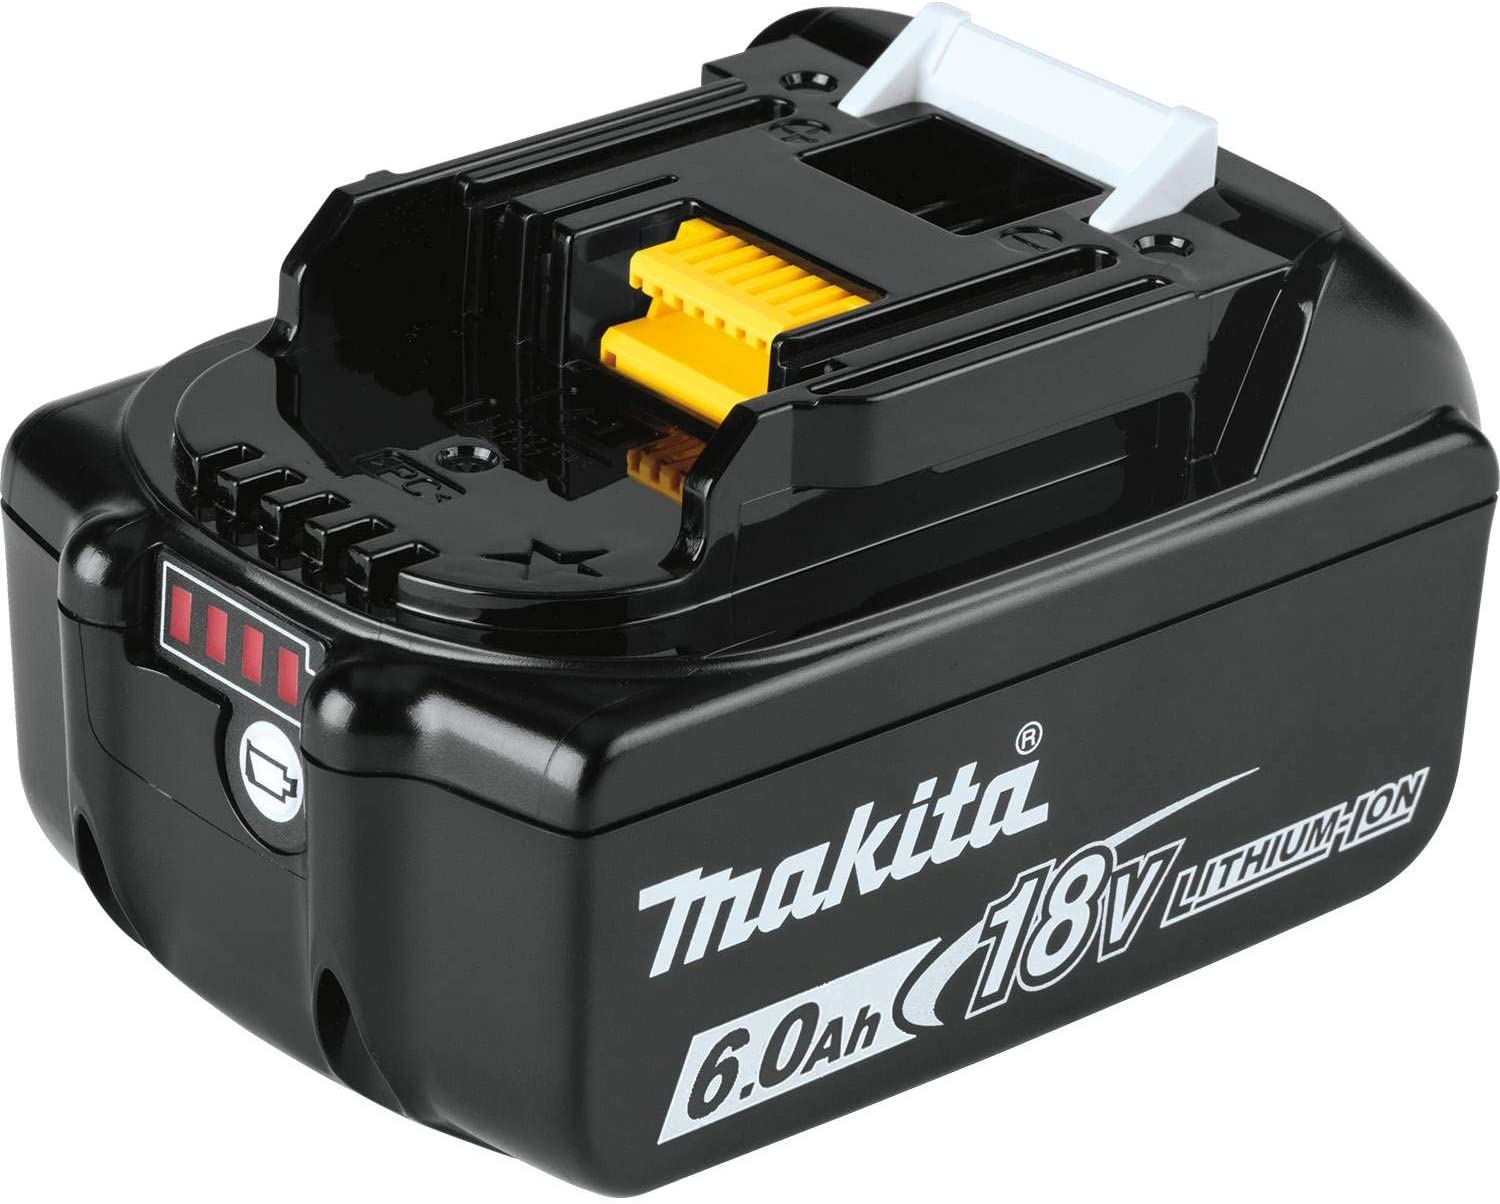 Makita Batteries Category